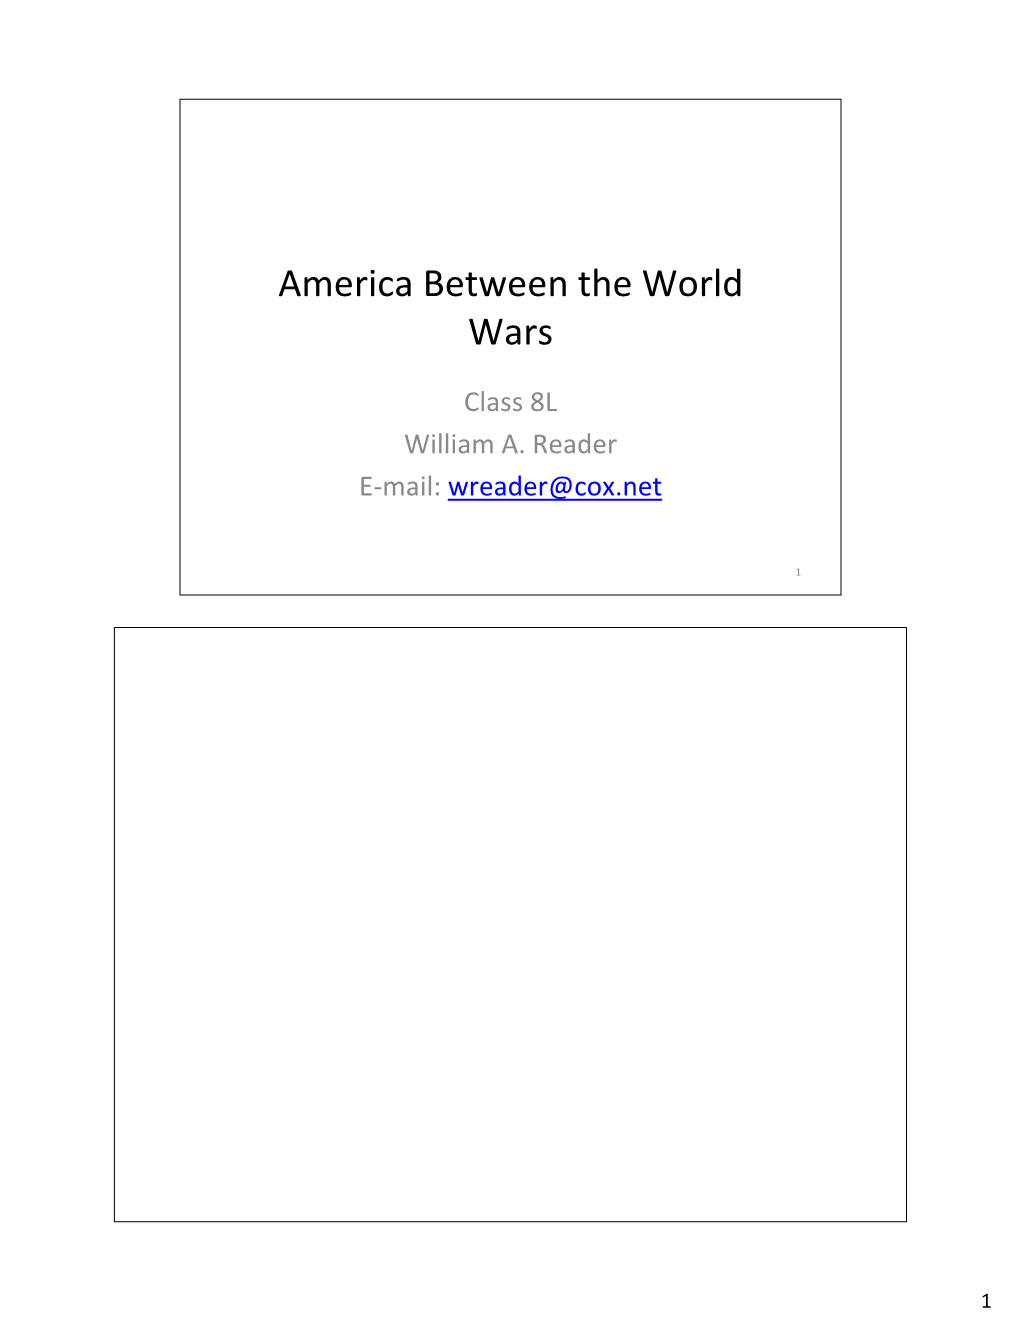 America Between the World Wars